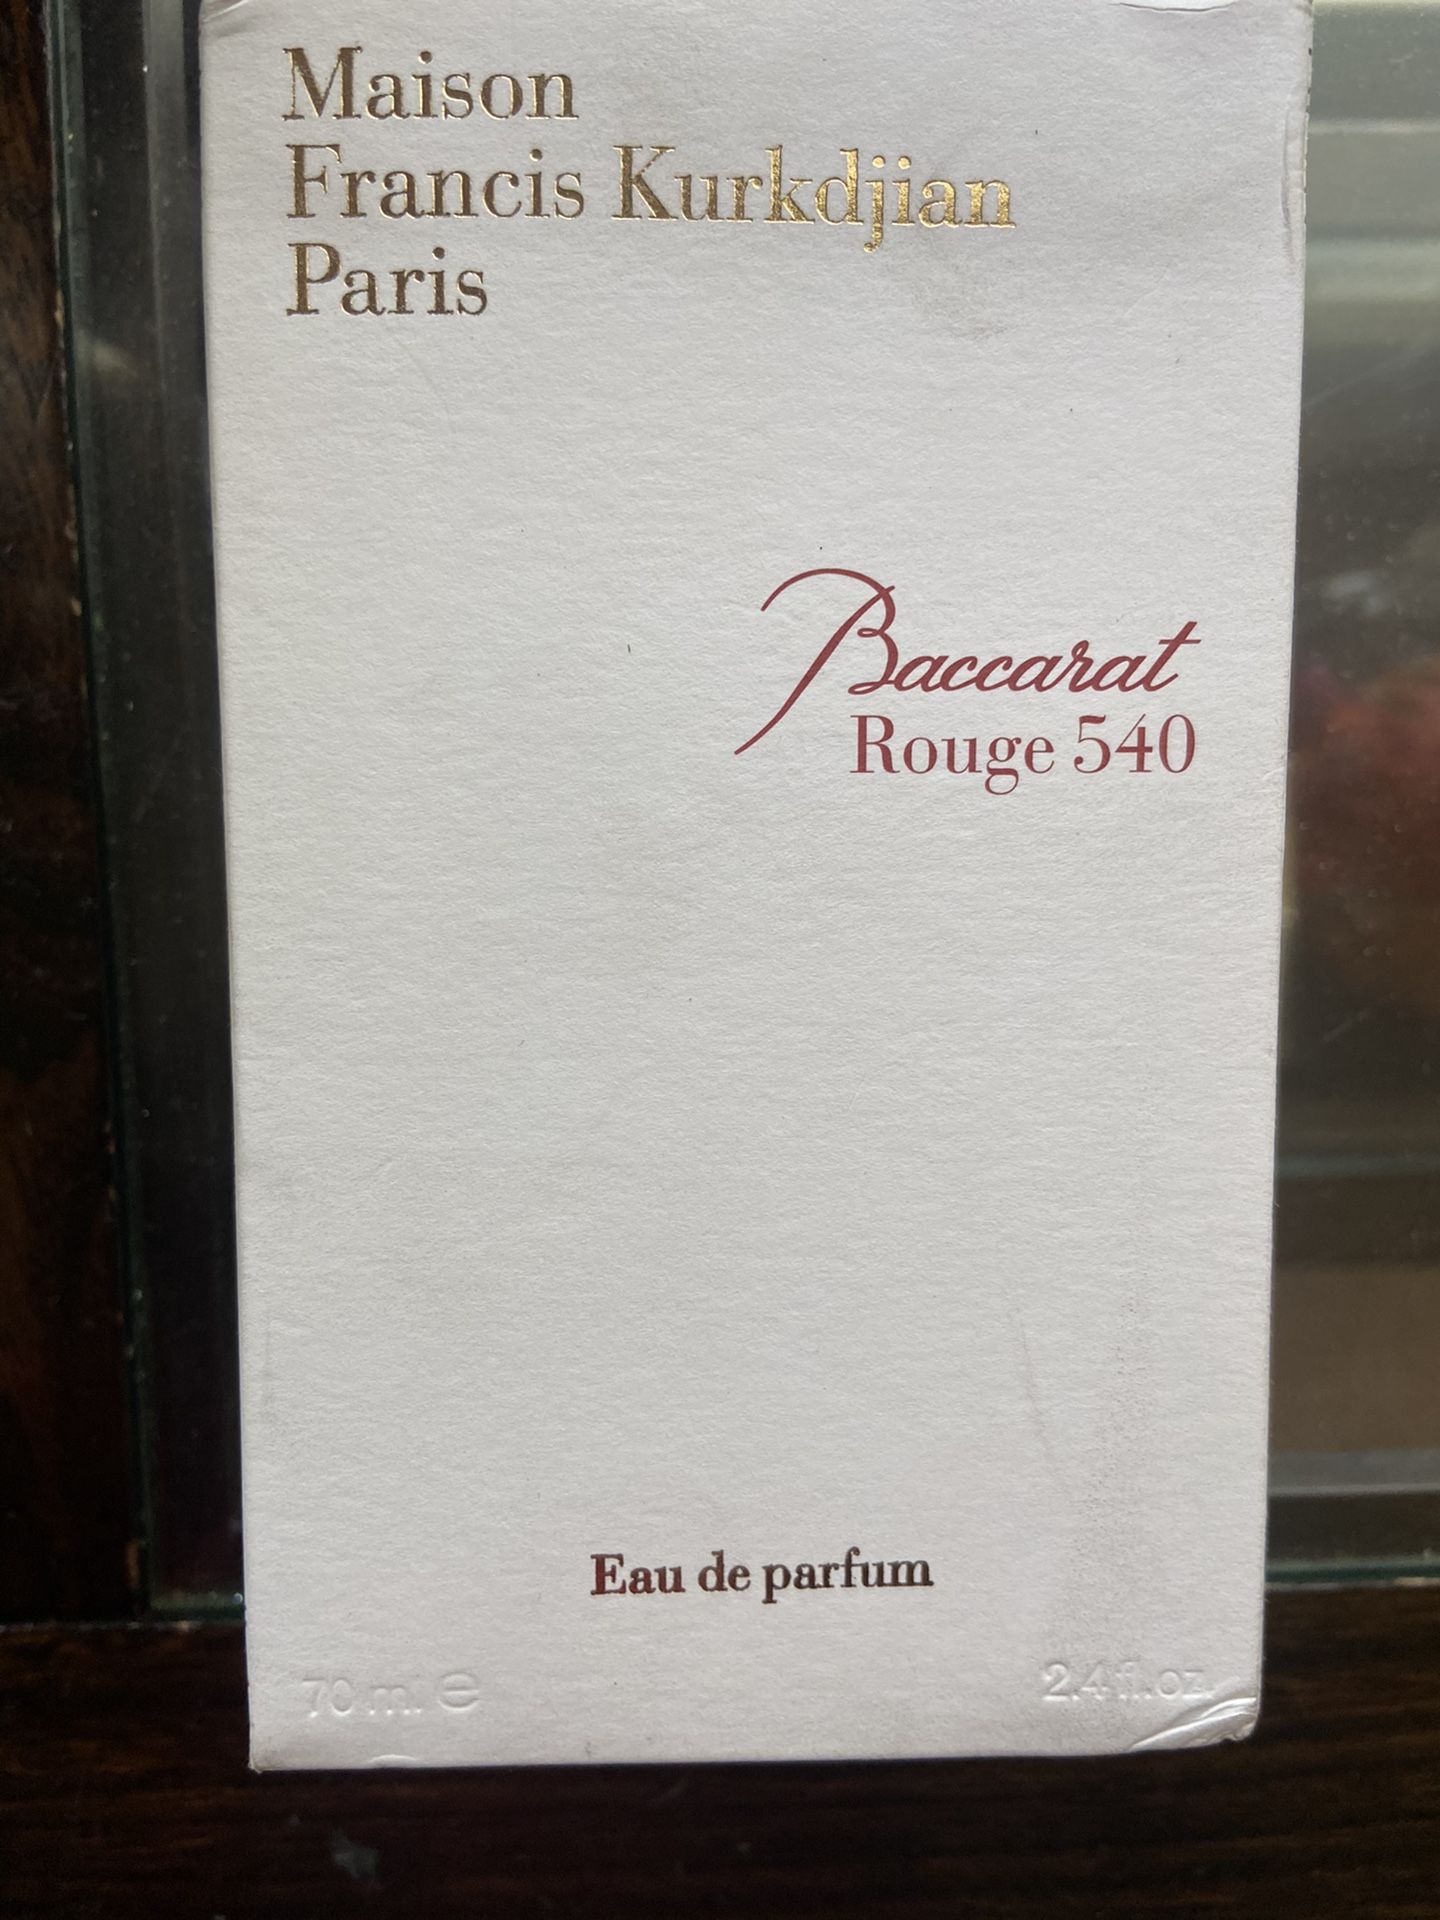 Maison Francis Kurkdjian “Baccarat Rouge 540”